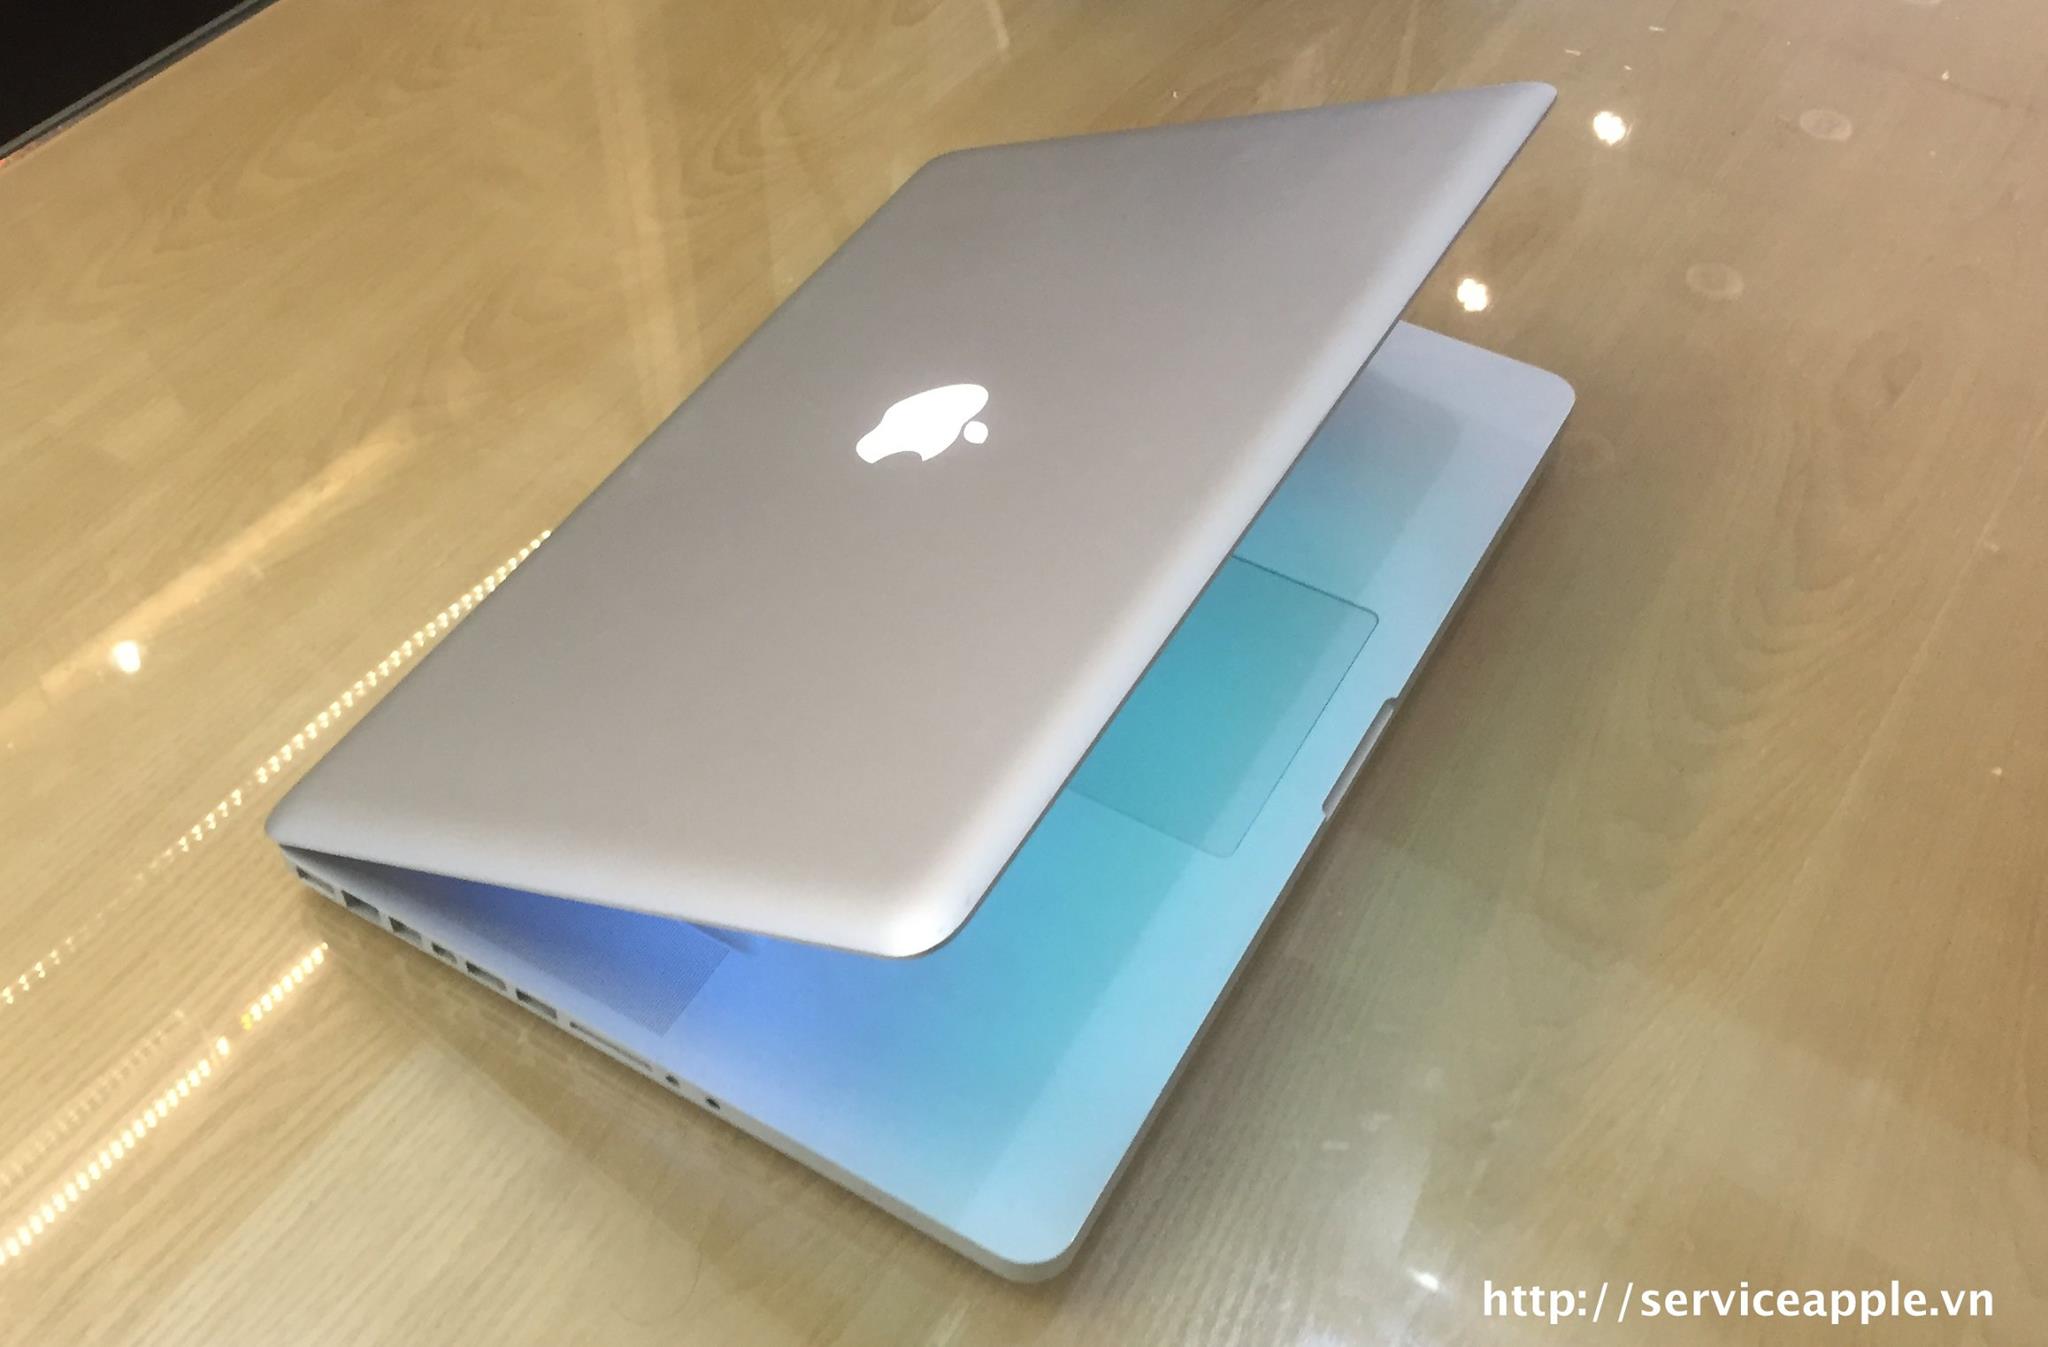  MacBook Pro MD103 Full Option _1.jpg